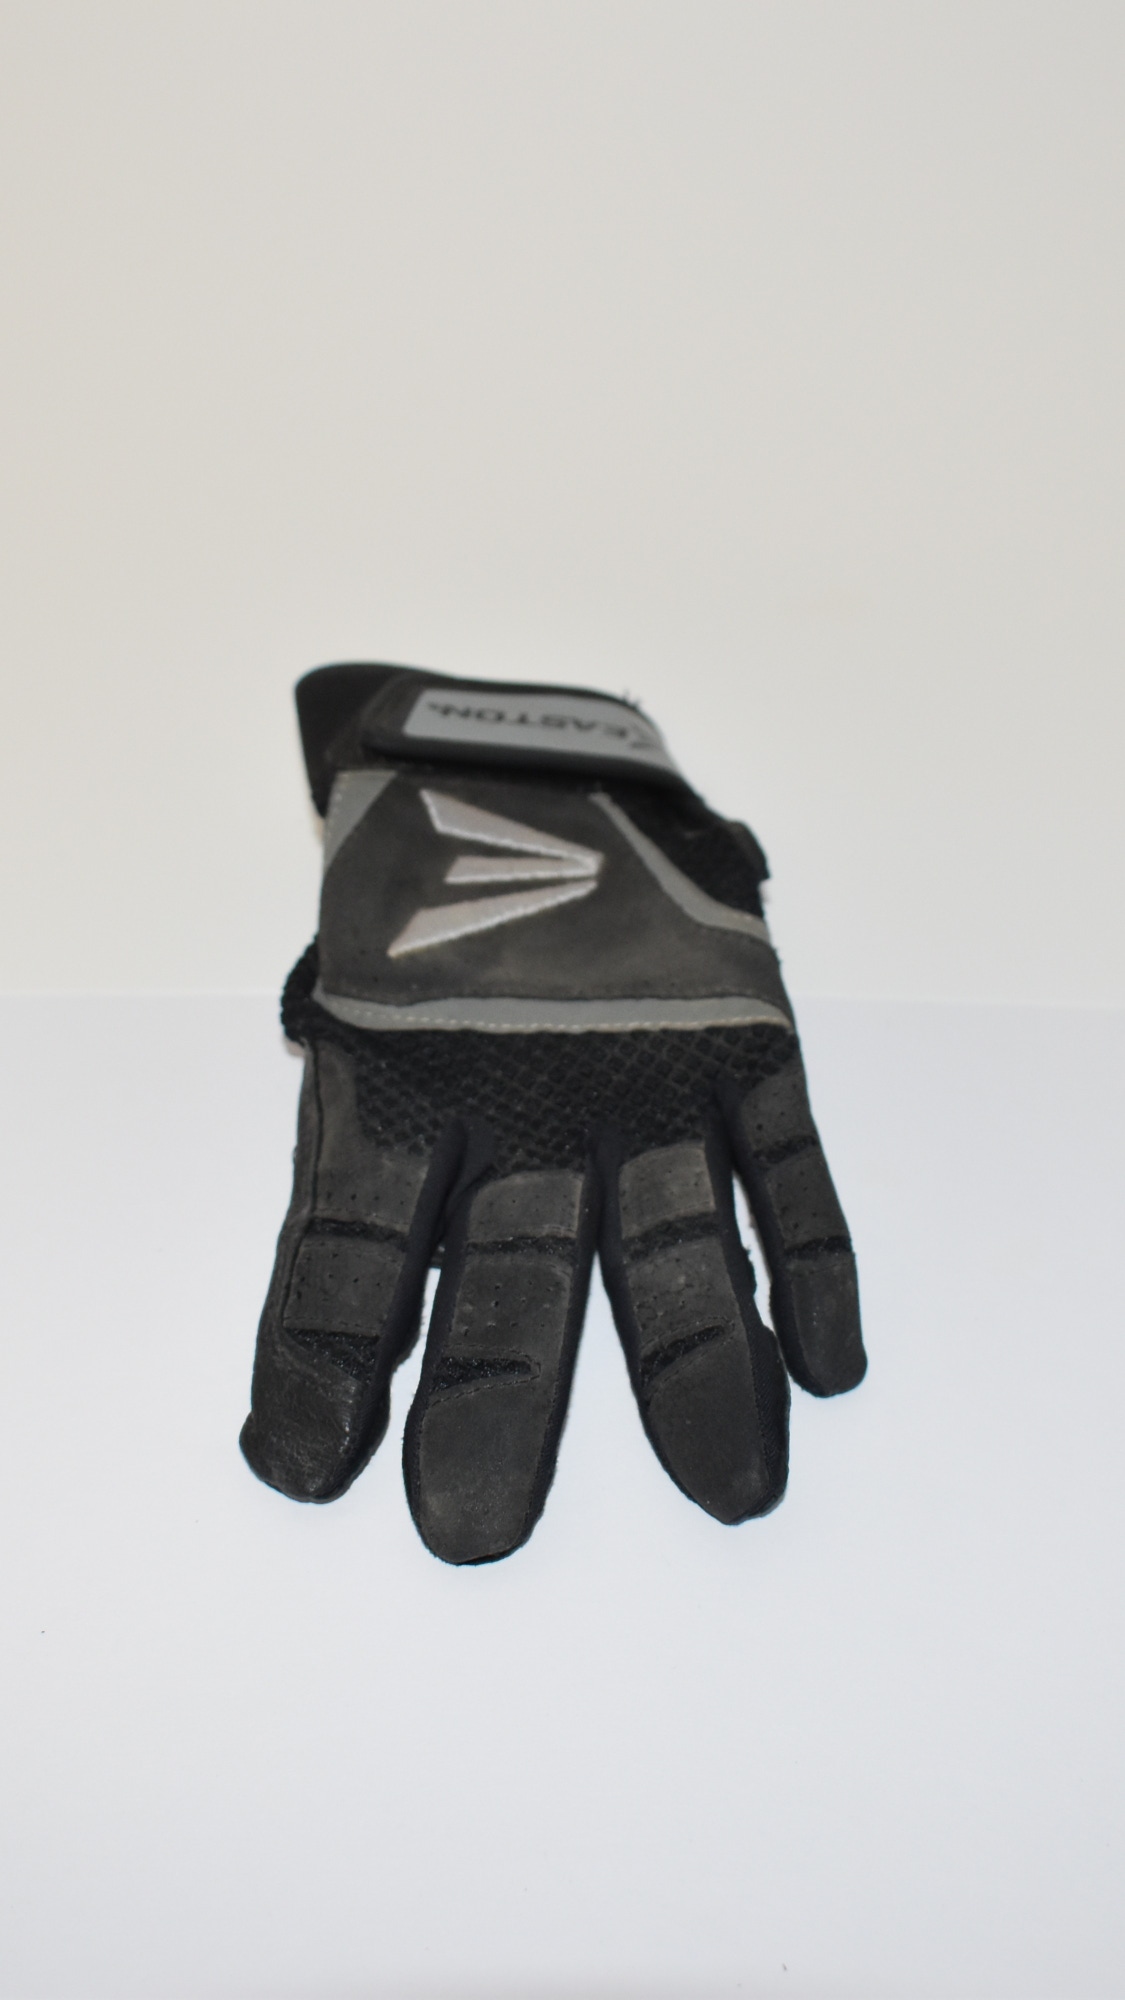 Easton VRS (Vibration Reduction System) Batting Glove  - Left